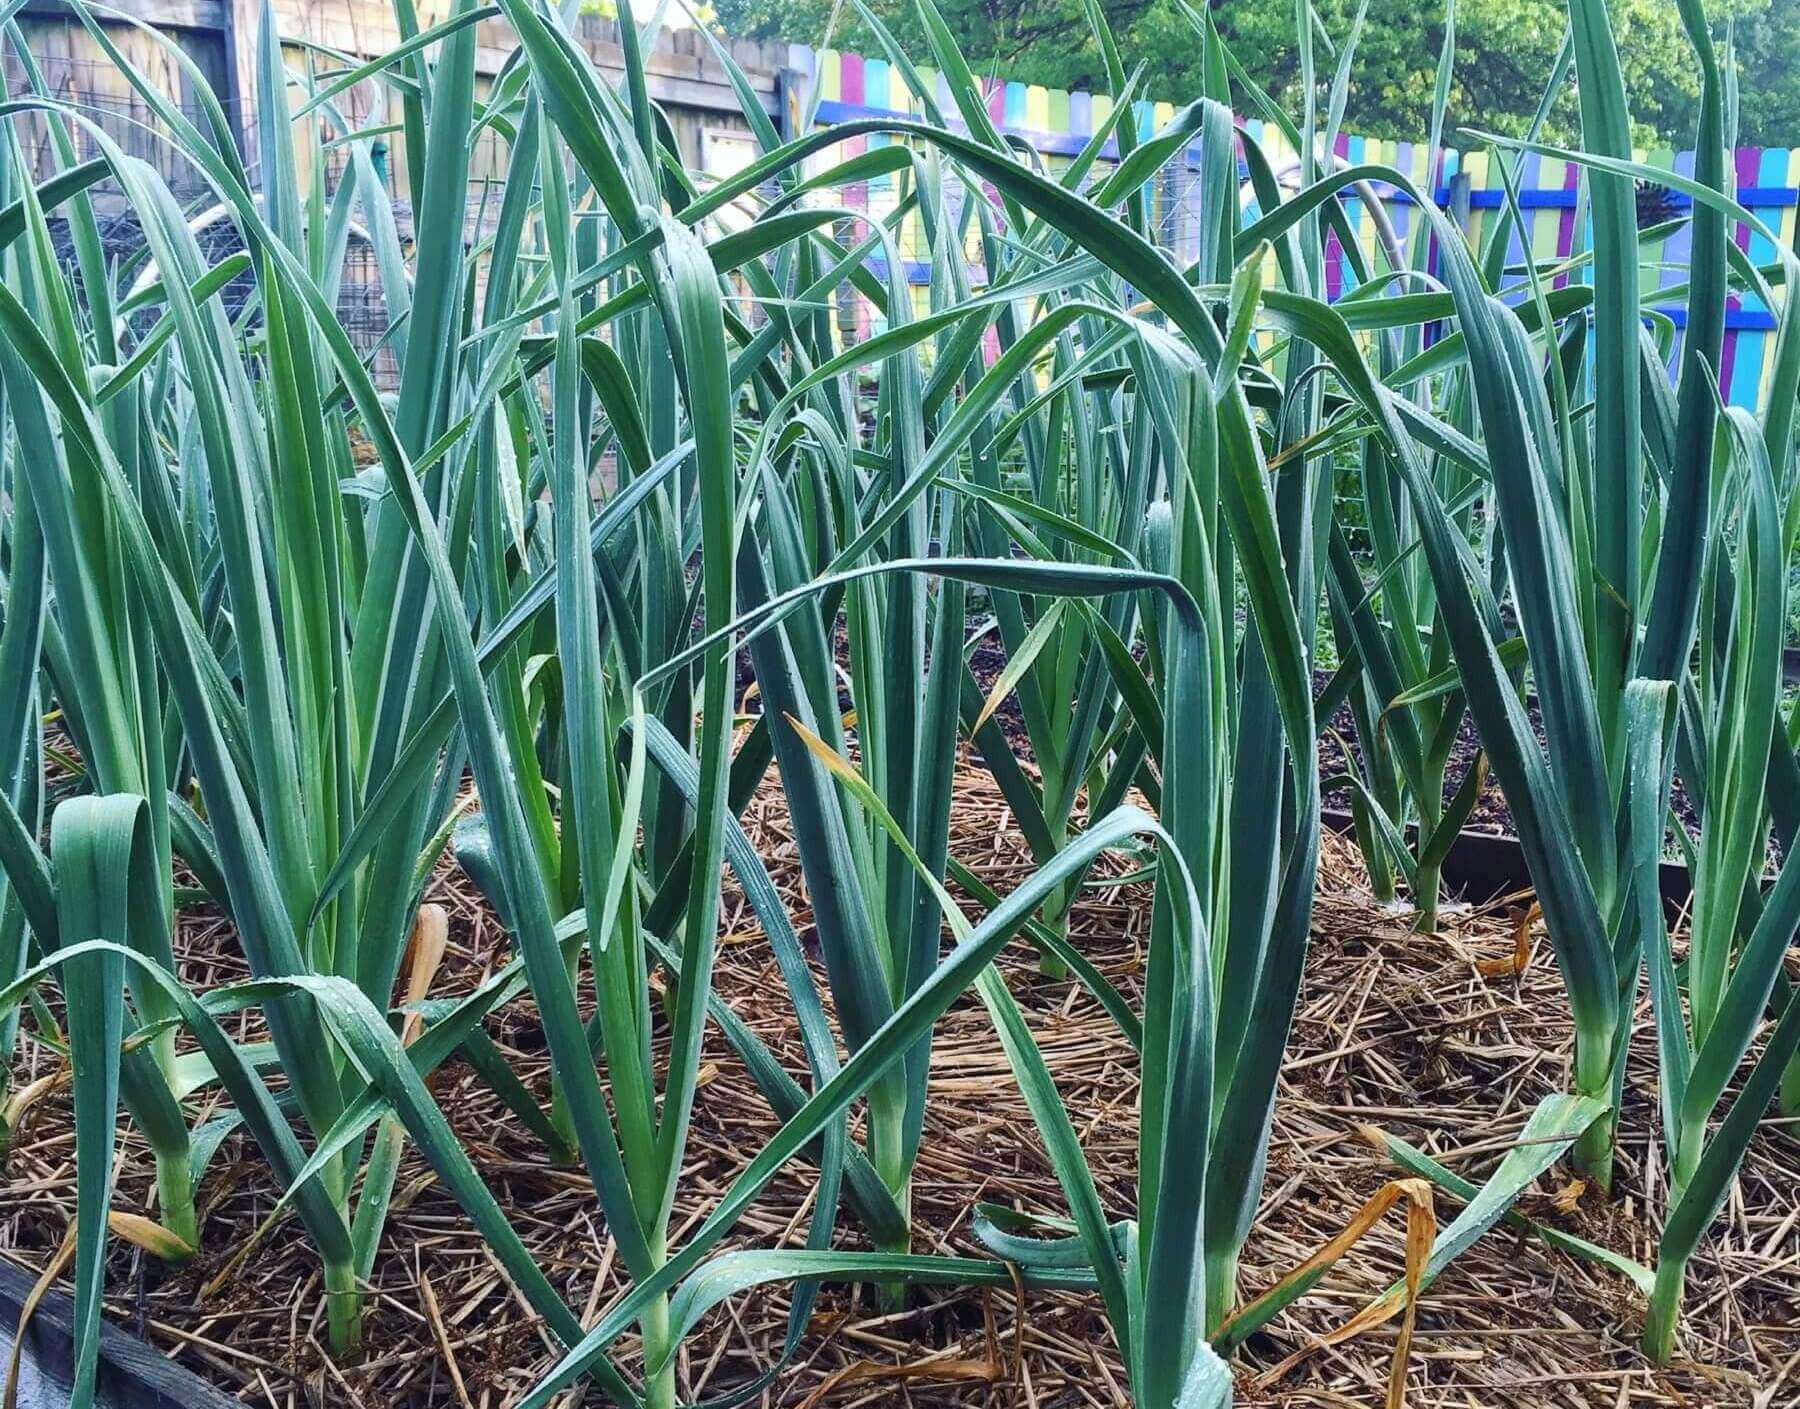 How To Grow & Harvest Garlic | Kellogg Garden Organics™